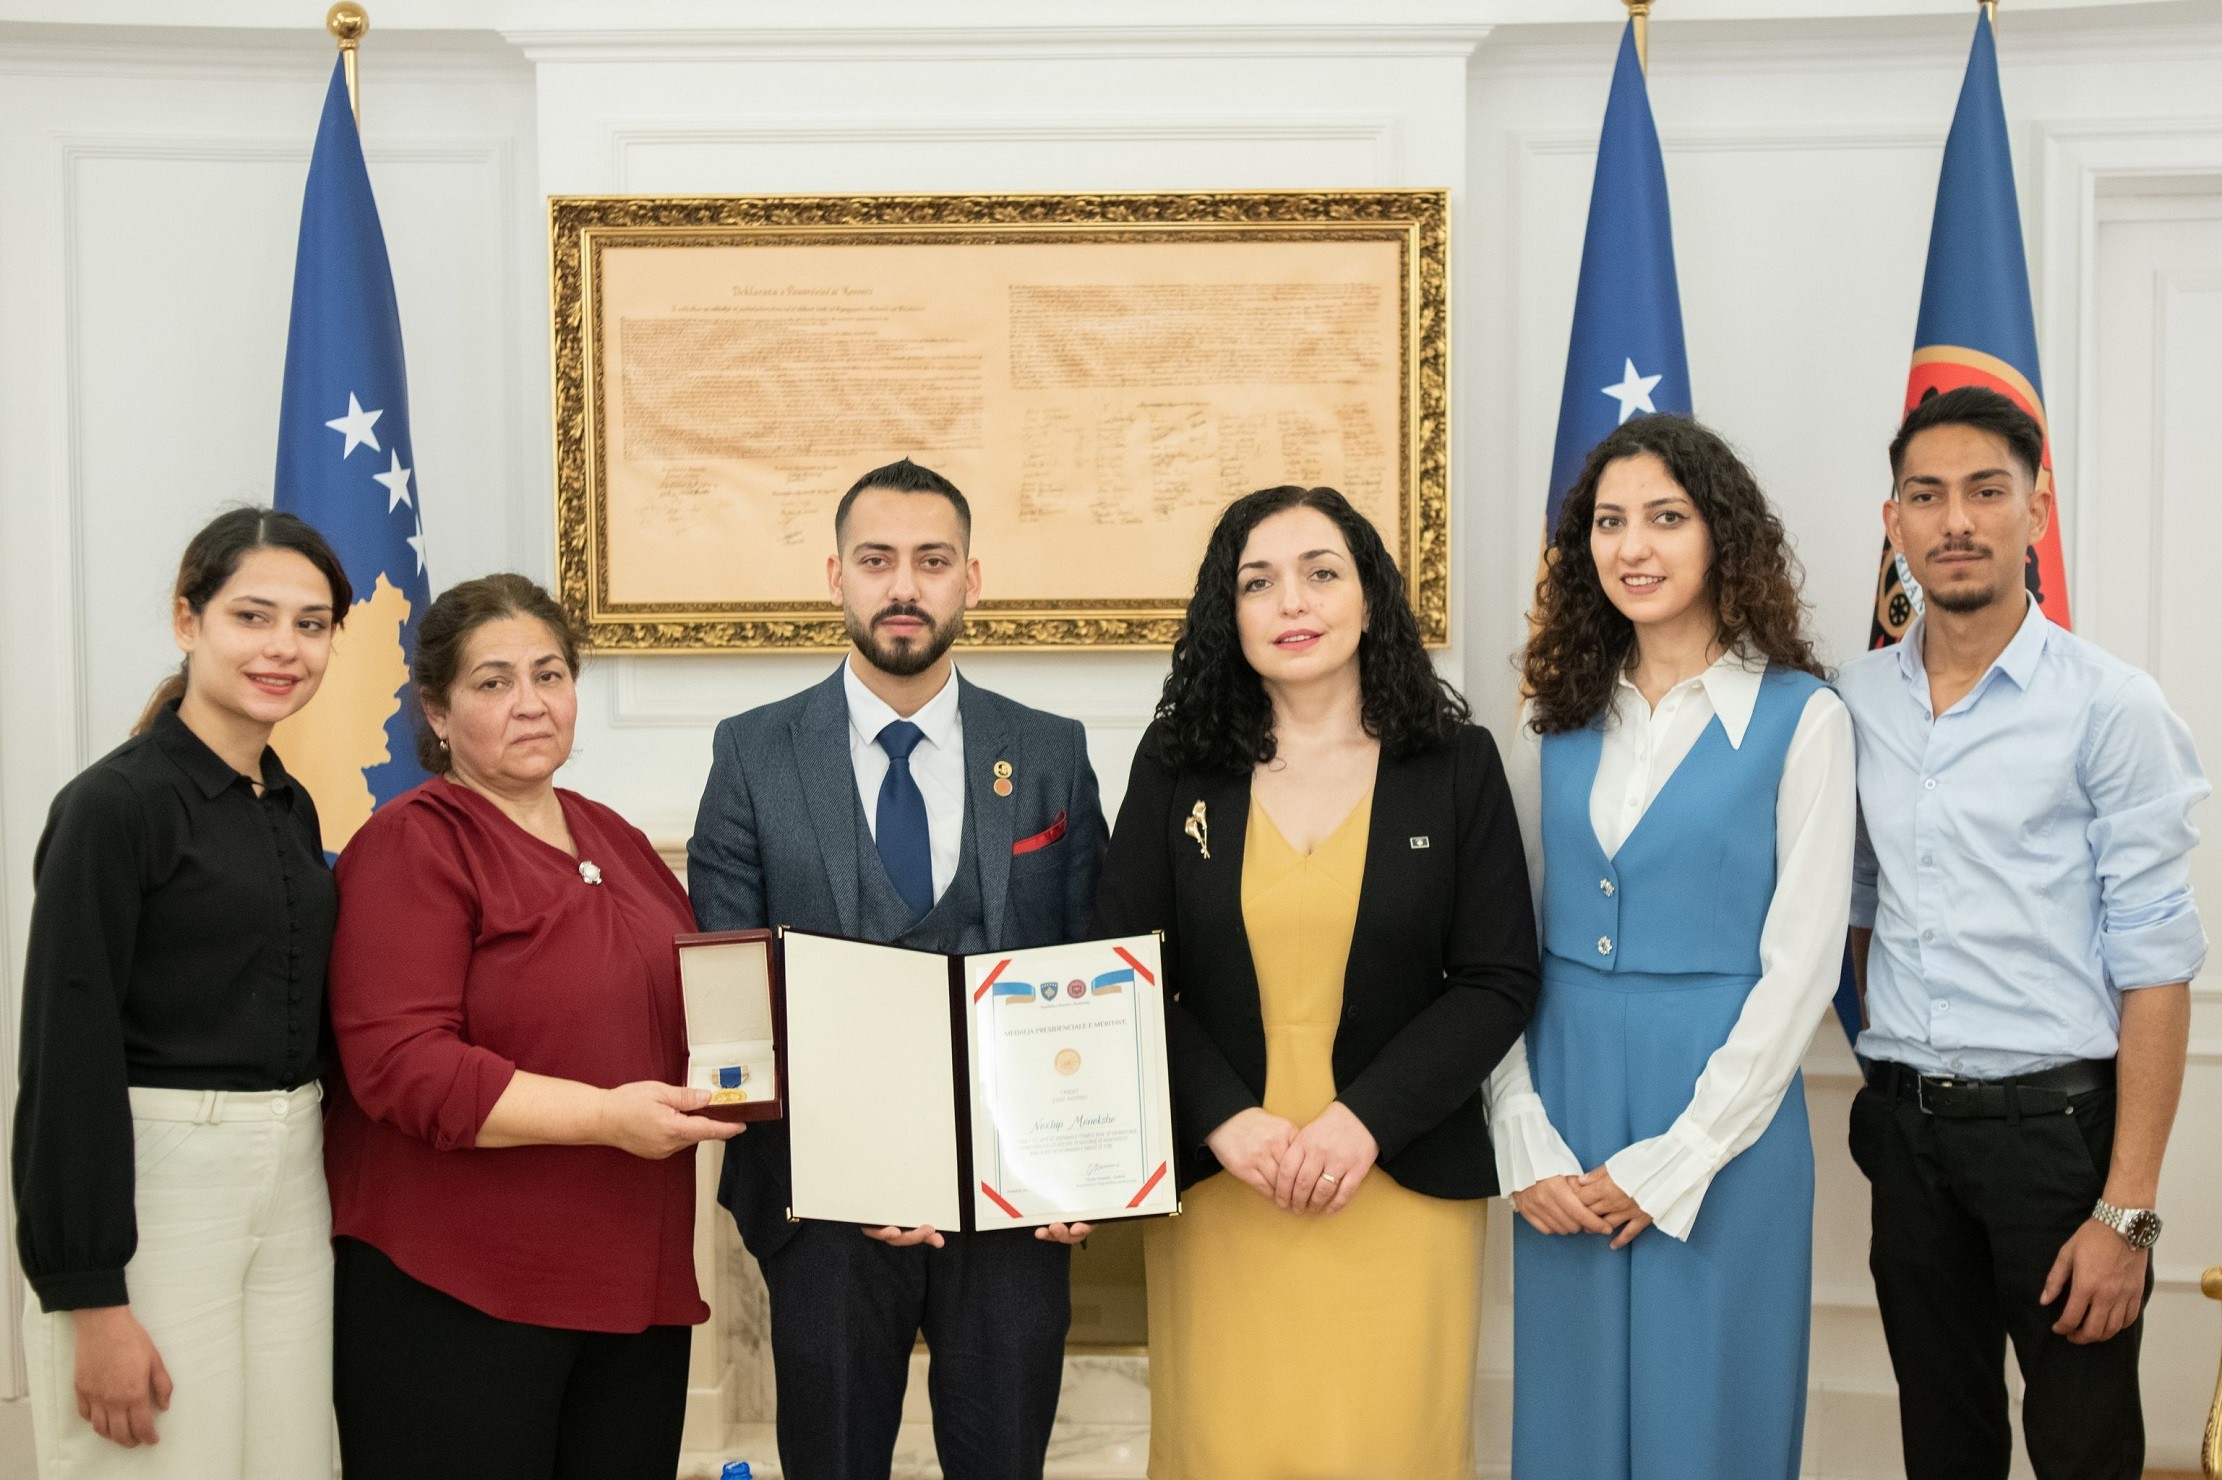 Presidentja Osmani dekoron me Medaljen Presidenciale të Meritave, dramaturgun Nexhip Menekshe